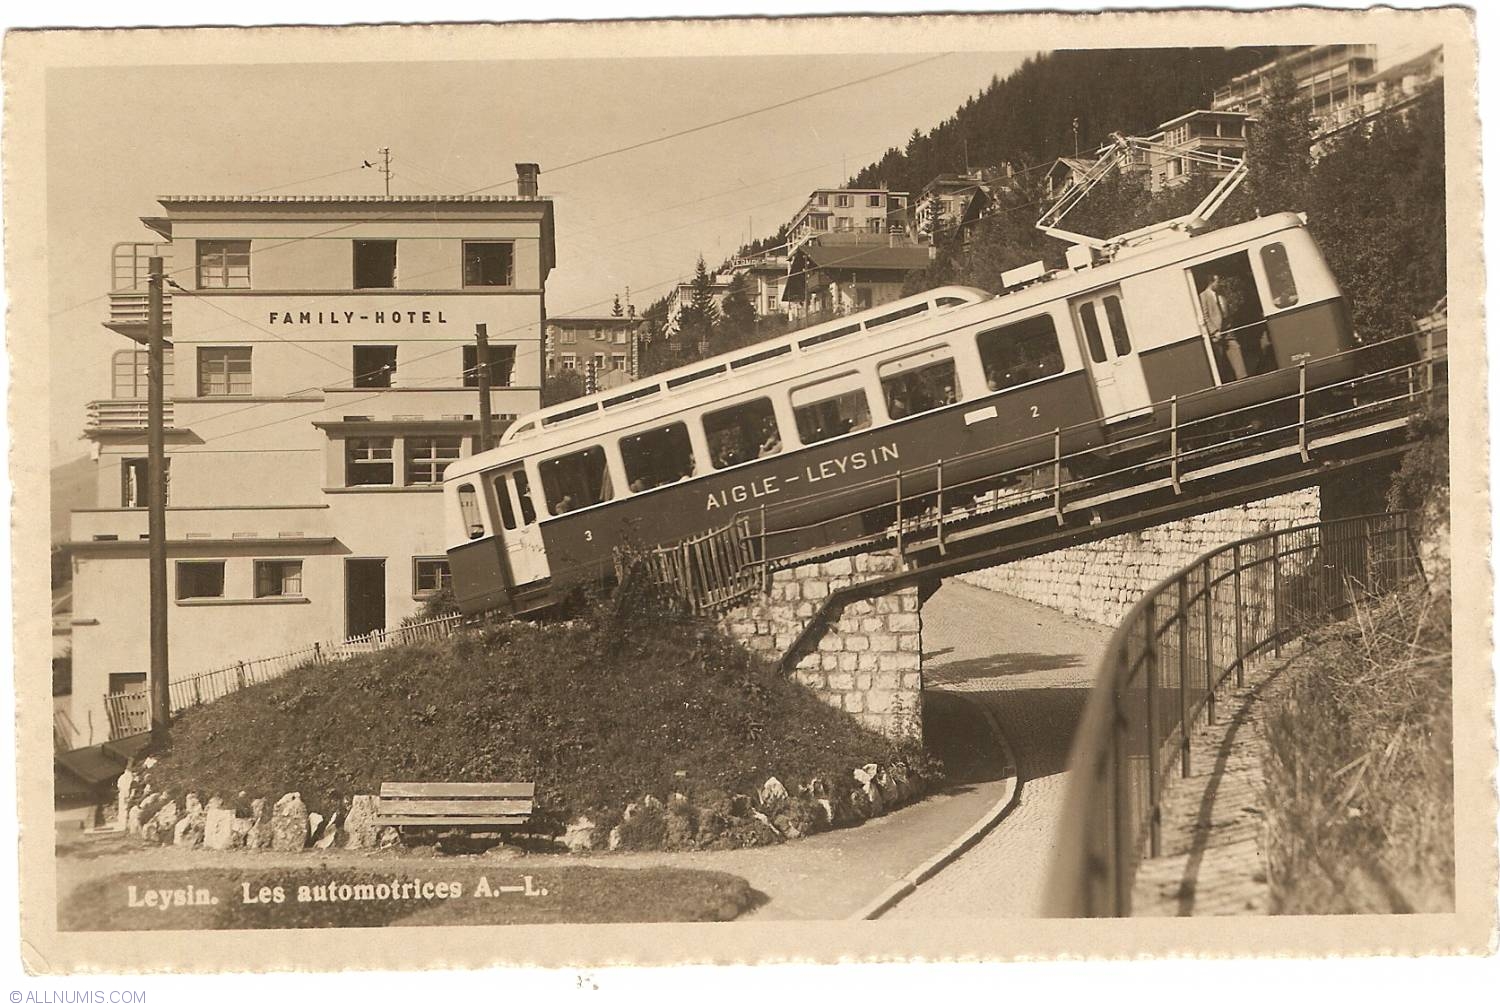 Odds Redaktør med sig Leysin - Train Aigle-Leysin (Les automotrices Aigle-Leysin), Leysin -  Switzerland - Postcard - 29648